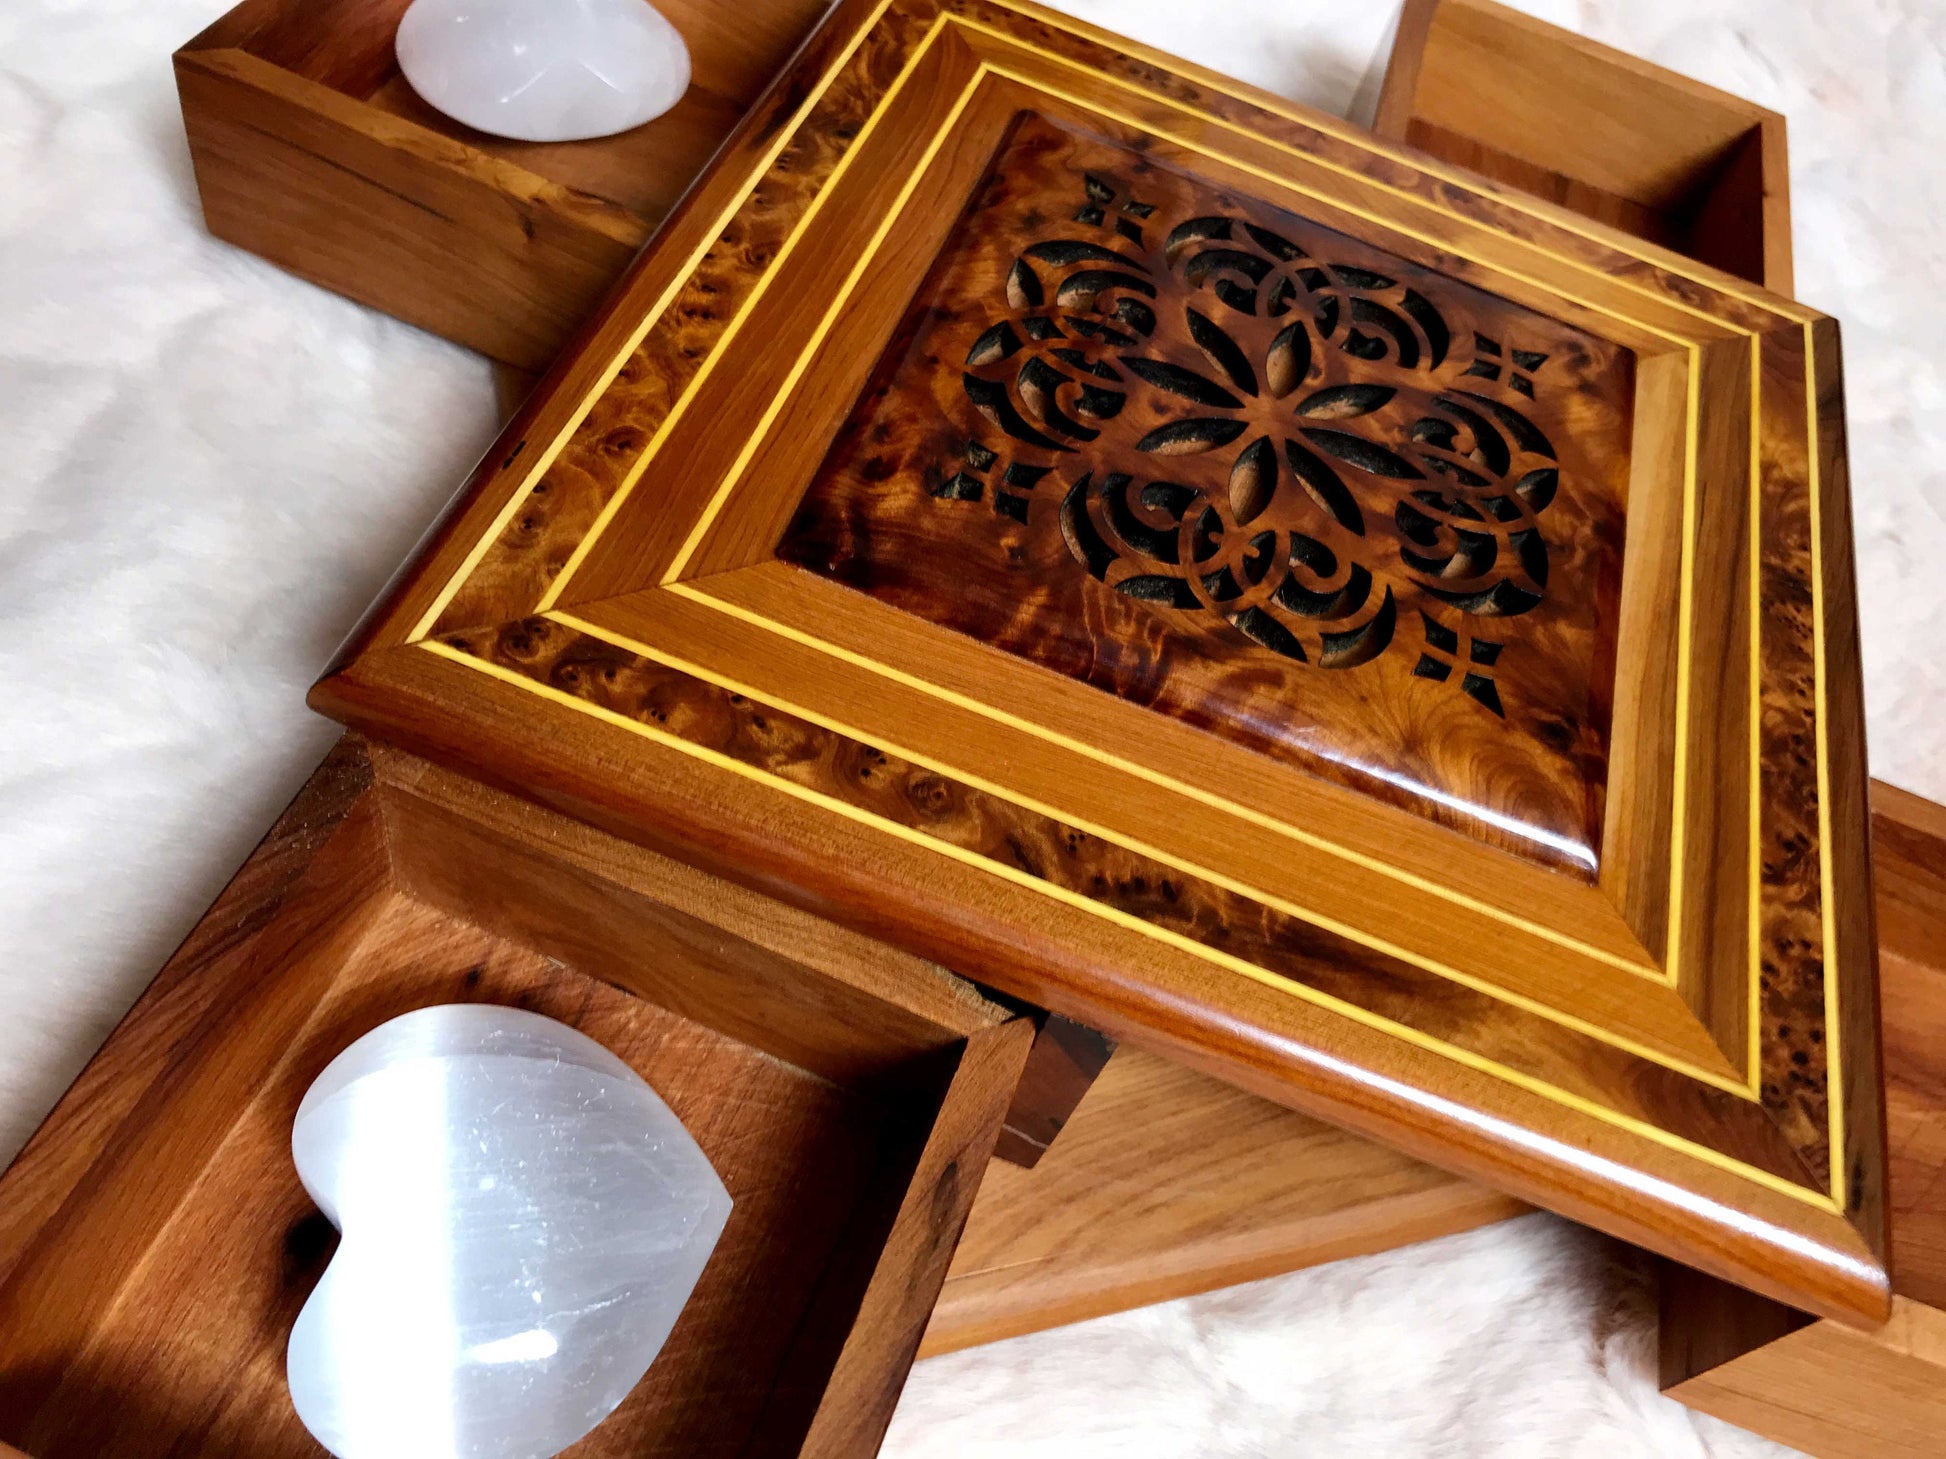 8"x6" Moroccan puzzle box,secret opening thuya wood jewellery Box organizer with 4 cases,mystery trinket jewelry box,wedding Jewelry memory